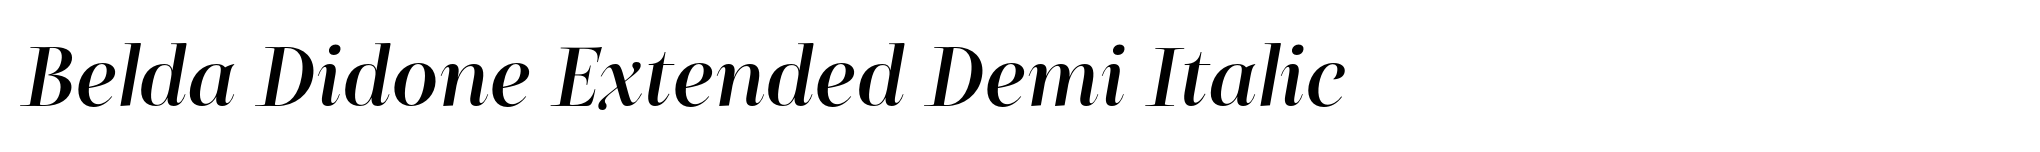 Belda Didone Extended Demi Italic image